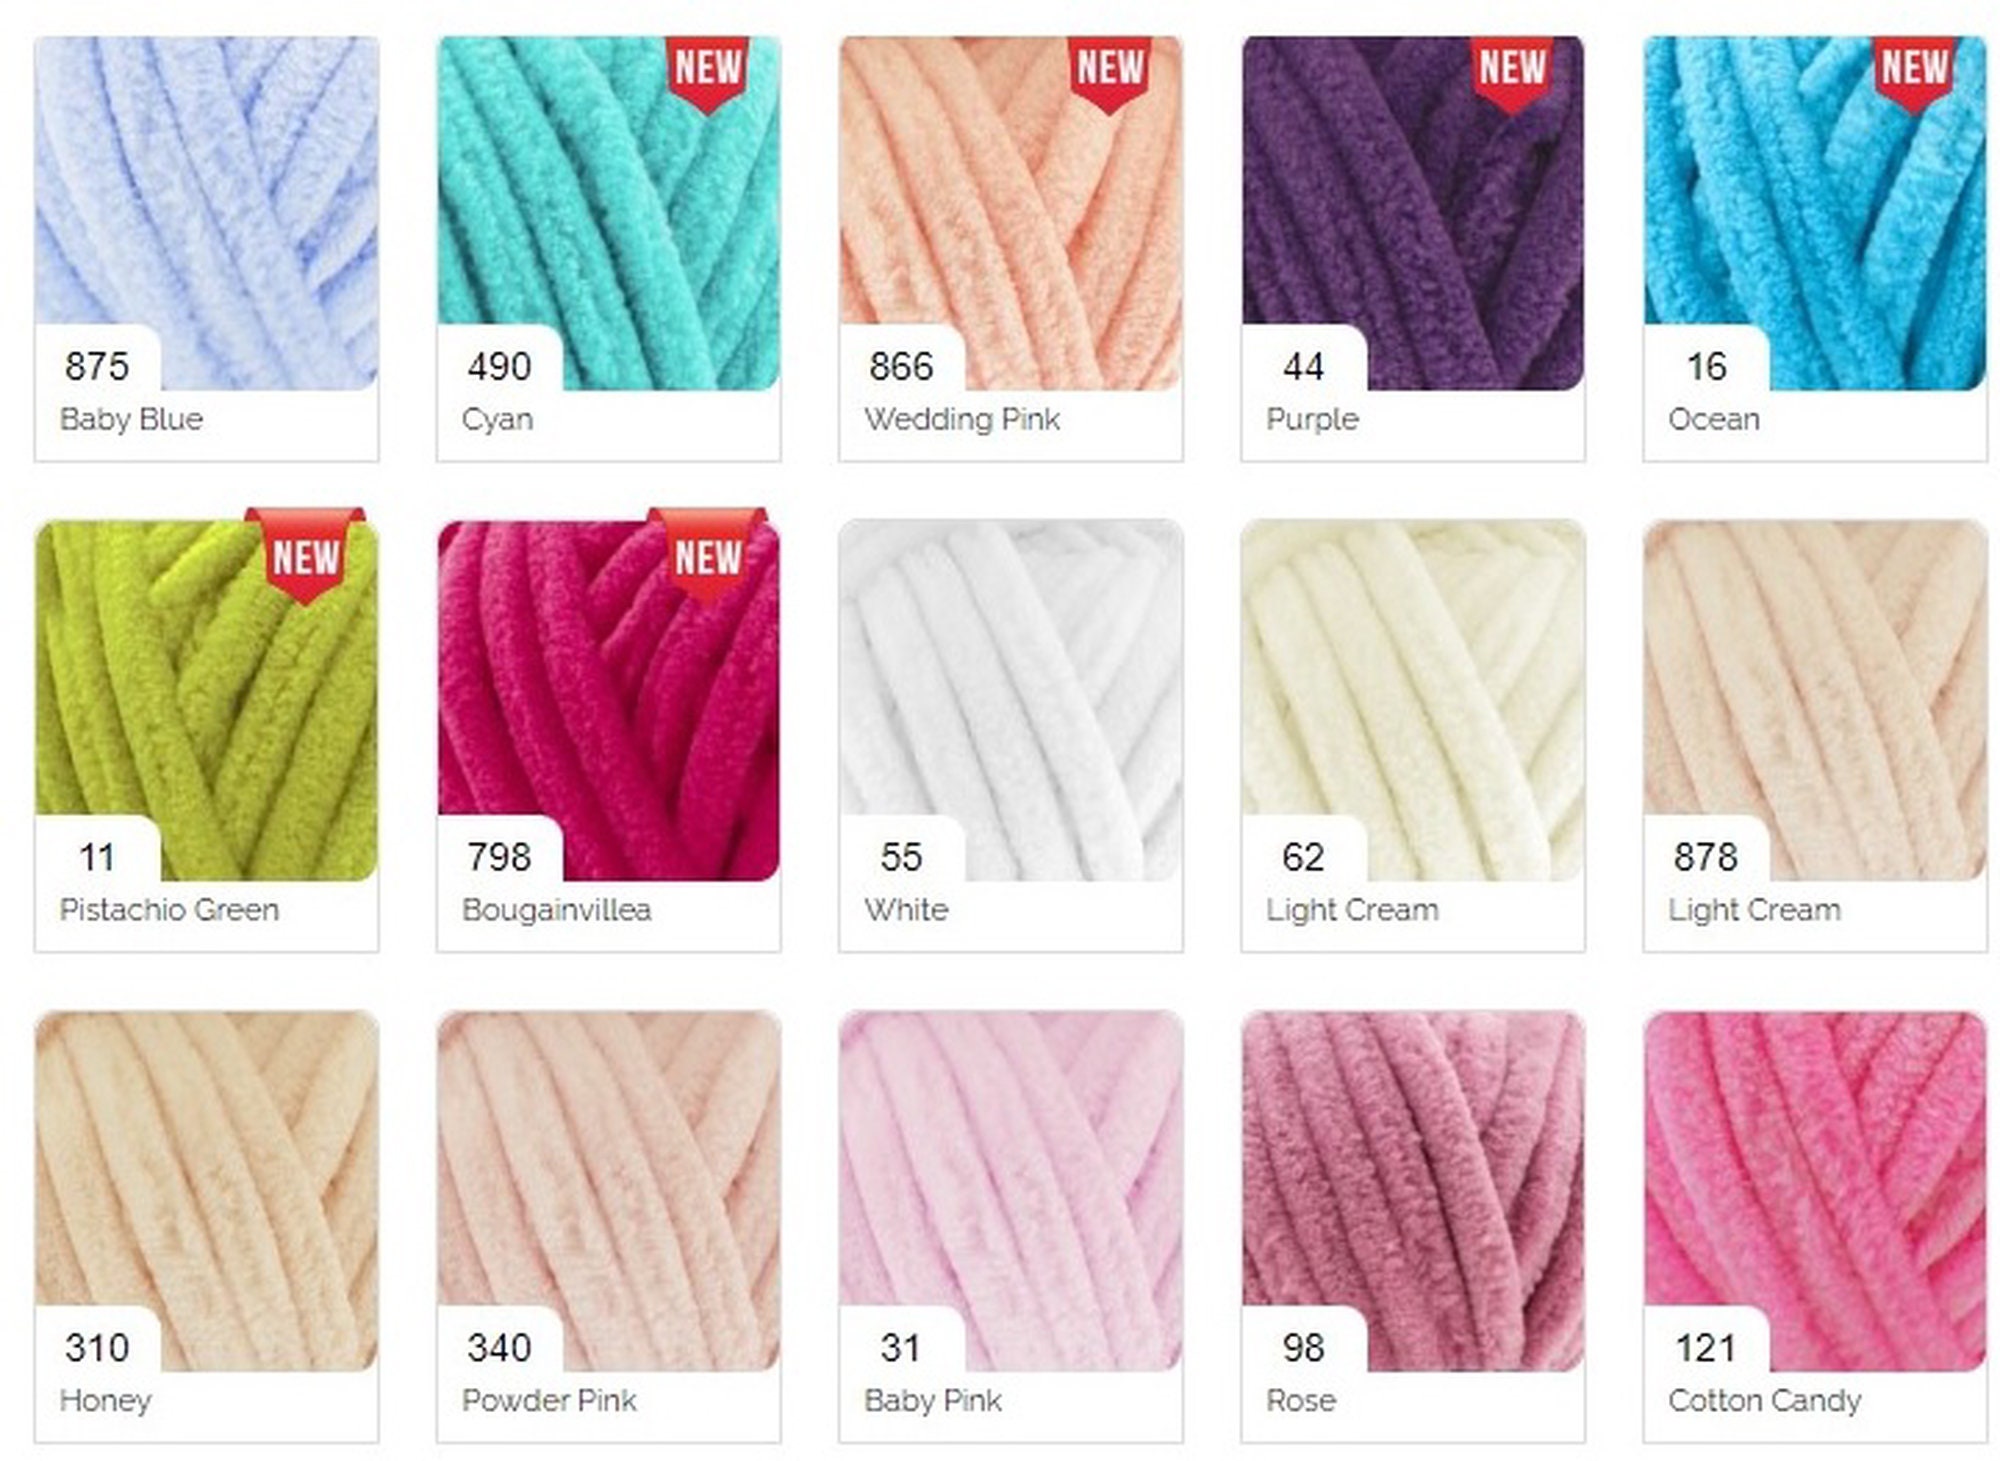 Alize Velluto 100gr 68mt Velvet Yarn Plush Yarn Knitting Yarn Baby Blanket  Crochet Yarn, Baby Blanket Yarn Yarn Chenille Yarn Winter Yarn 